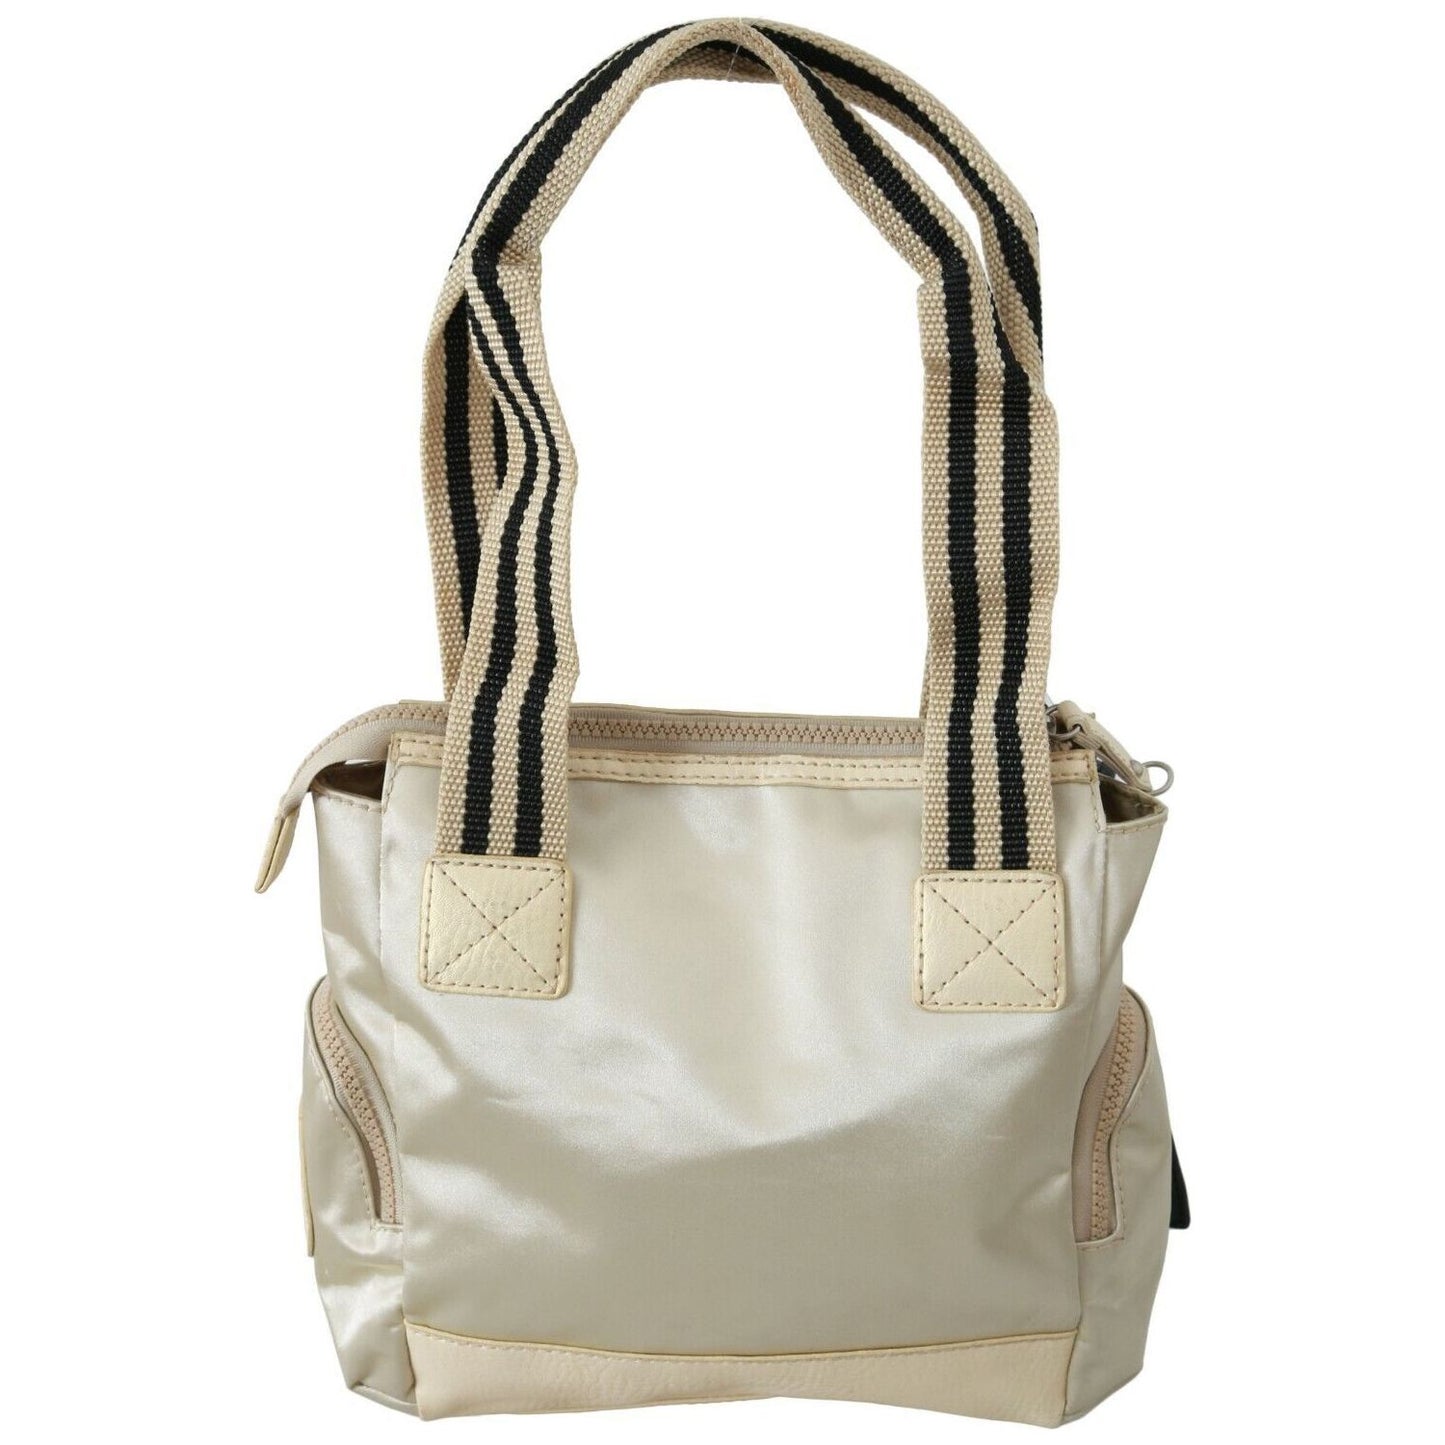 WAYFARER Chic Beige Fabric Handbag WOMAN TOTES beige-handbag-shoulder-tote-fabric-purse-1